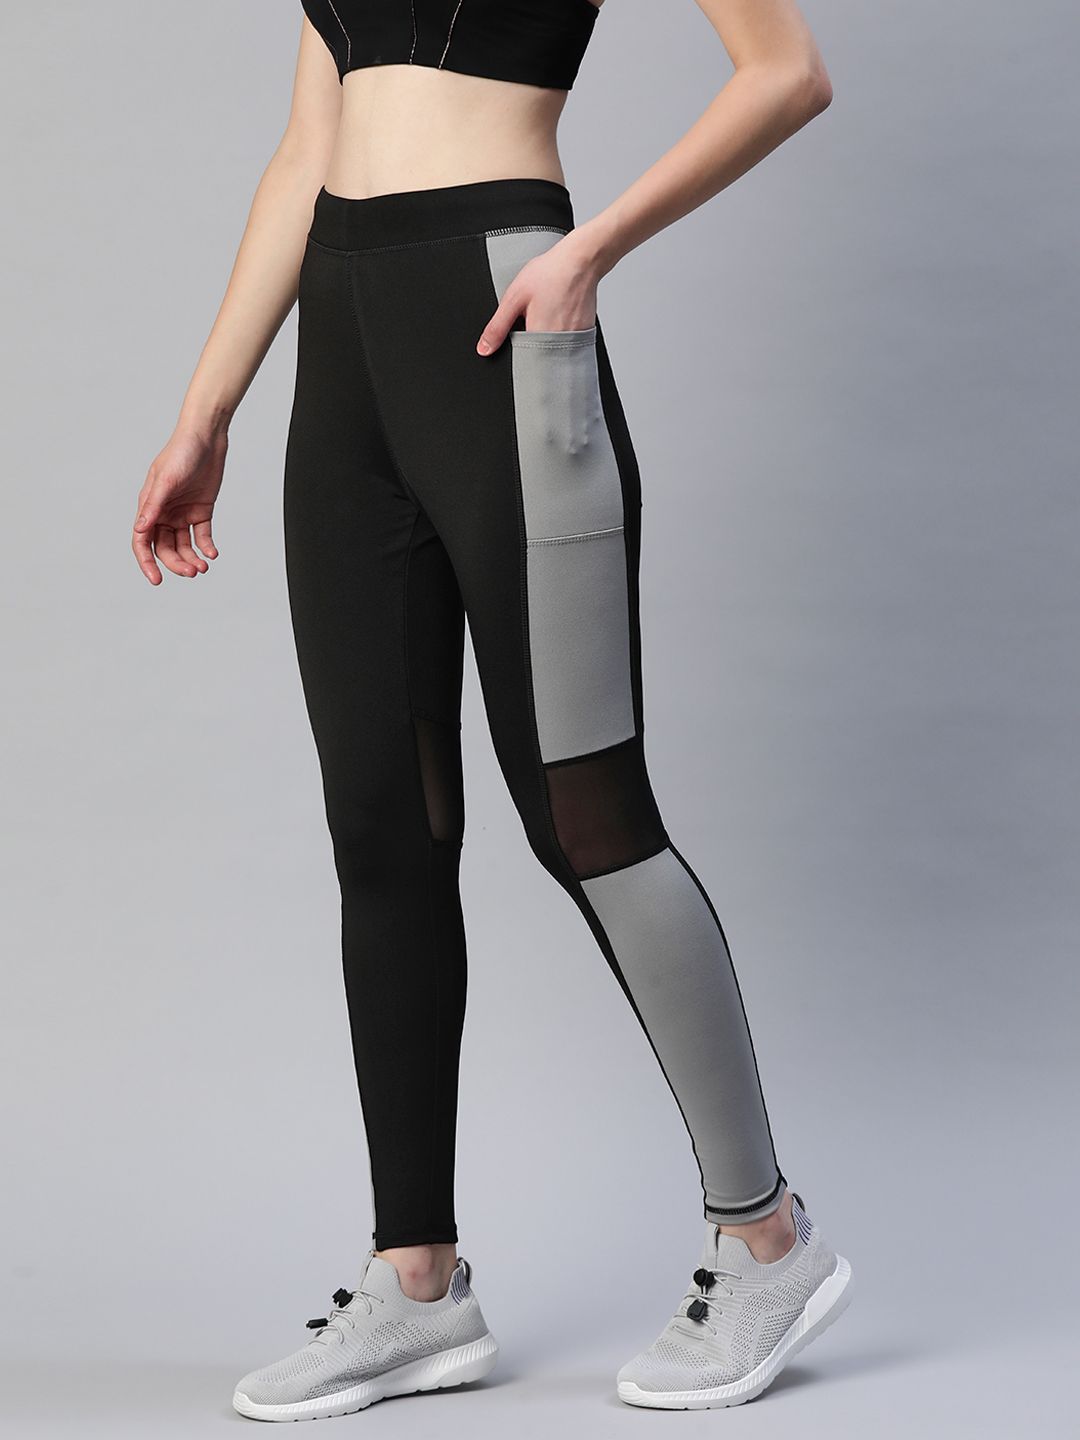 Blinkin Women Black & Grey Colourblocked Rapid Dry Tights with Mesh Panels & Side Pockets